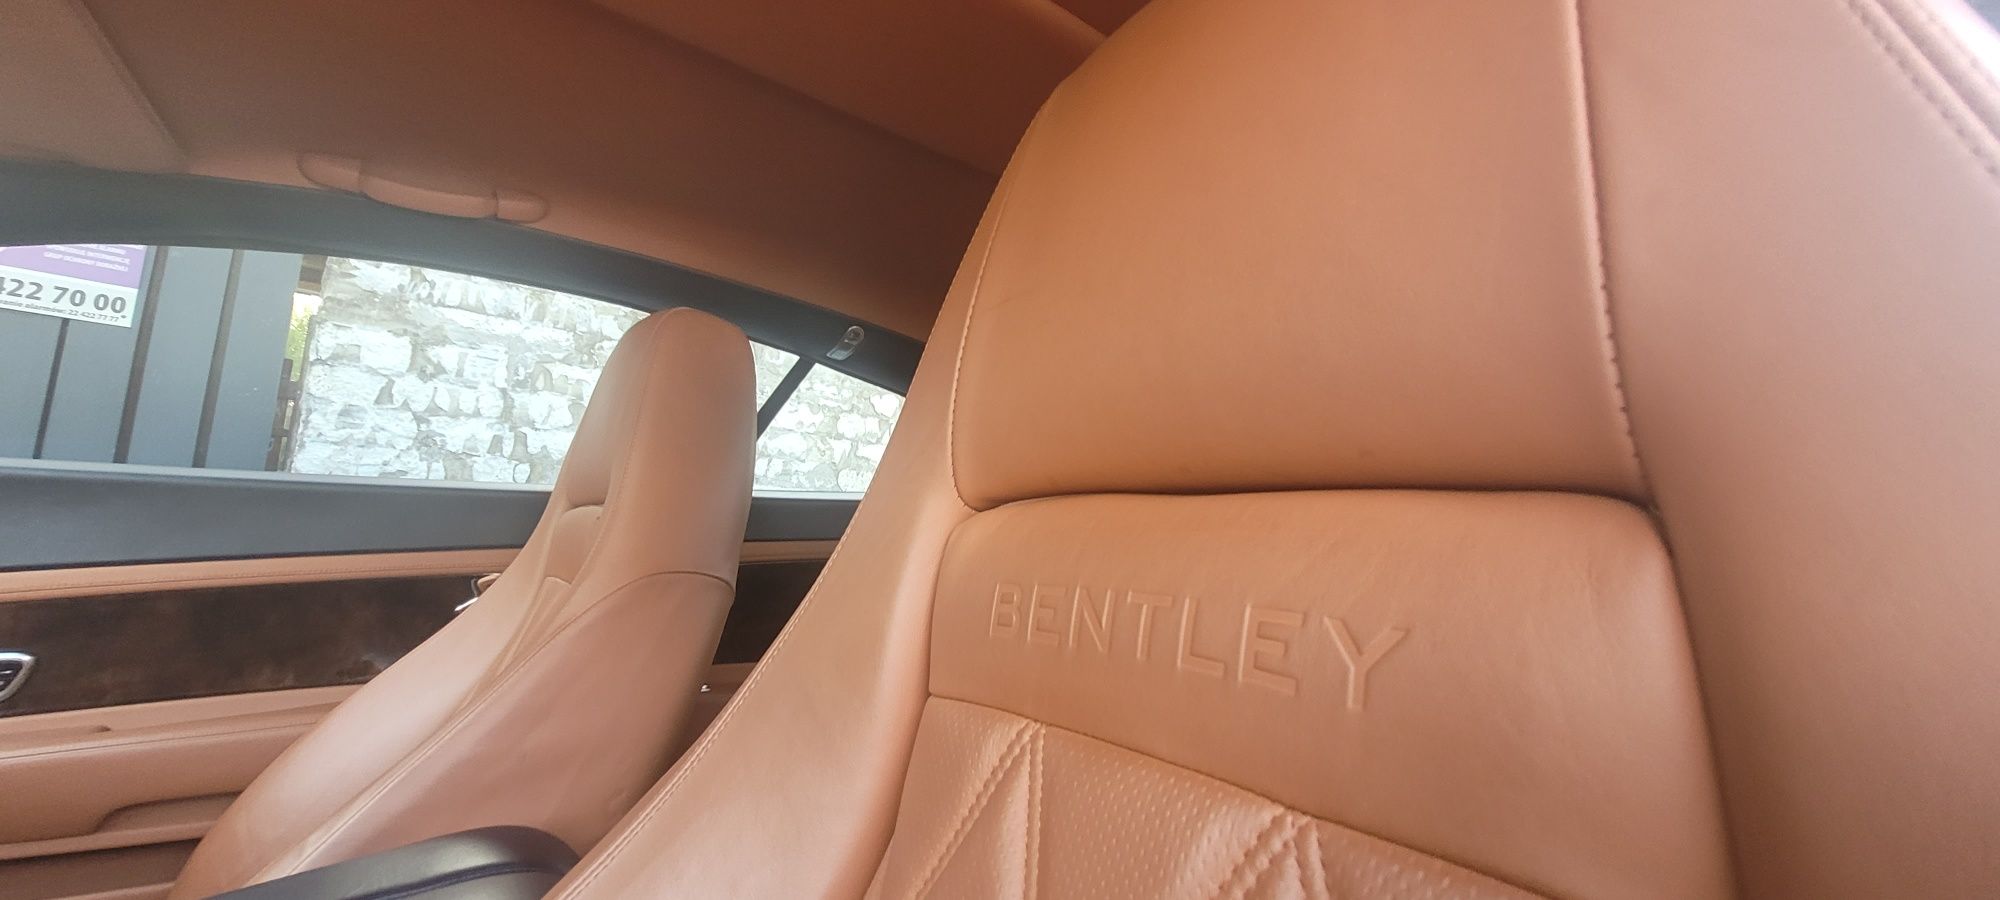 .../// ZAMIANA MULINNER 6.0 Bentley continental gt ///...